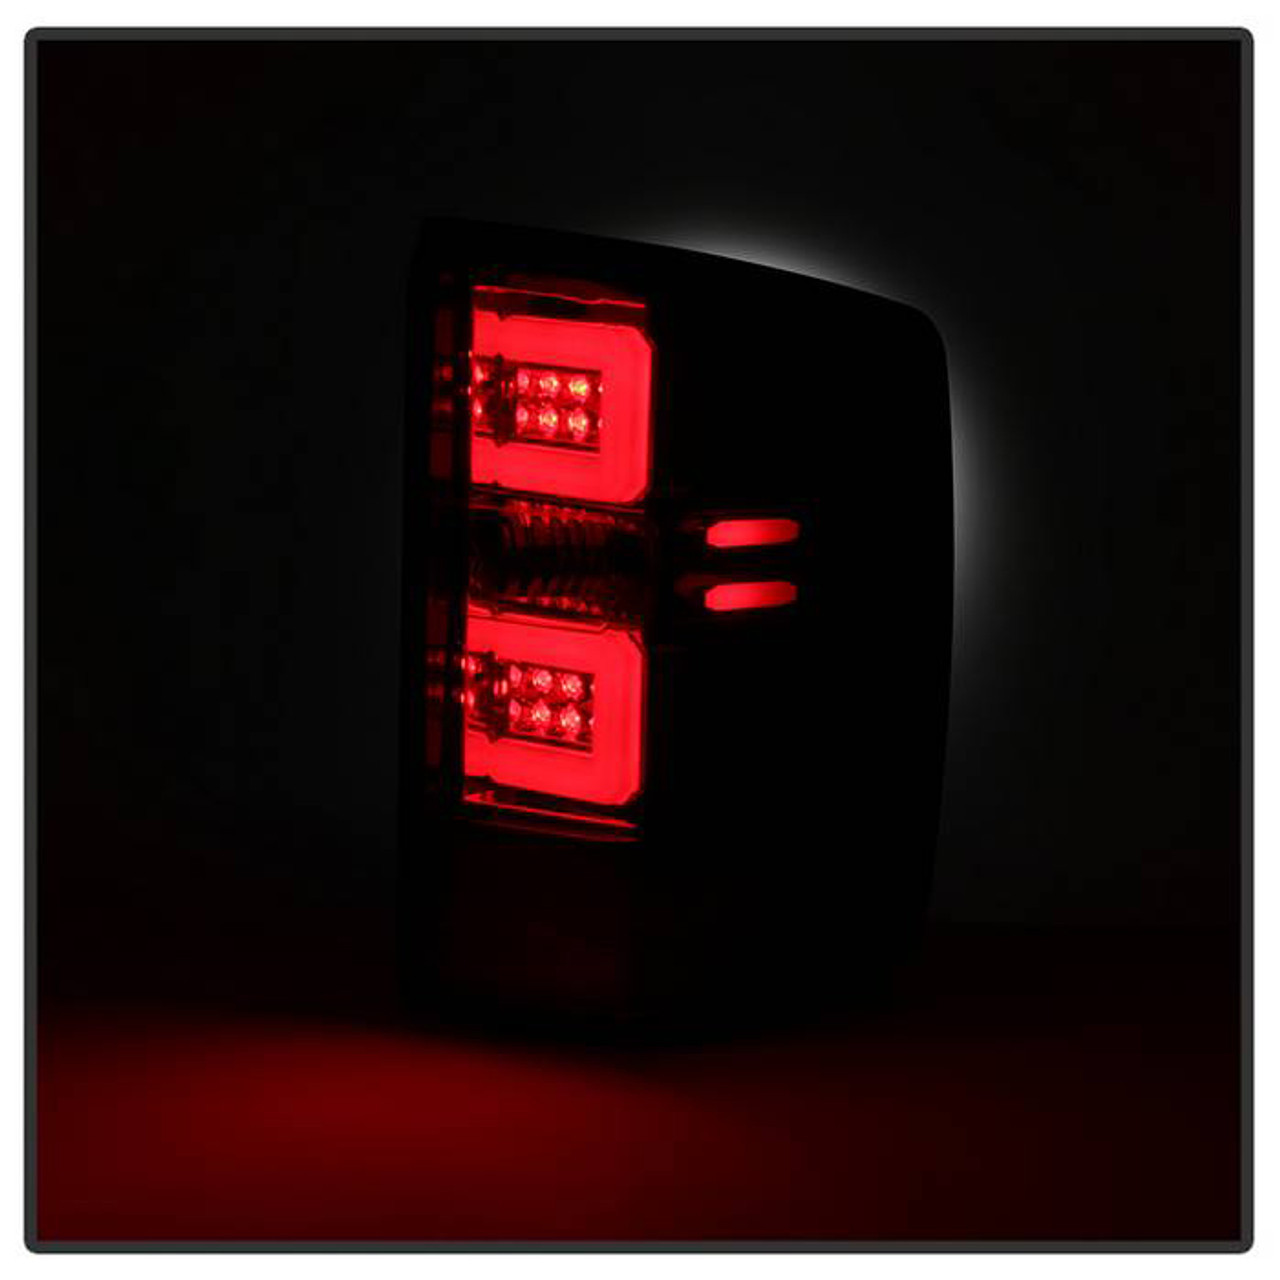 Spyder Light Bar LED Tail Lights - Red Housing / Clear Lens - 16-18 Silverado 1500